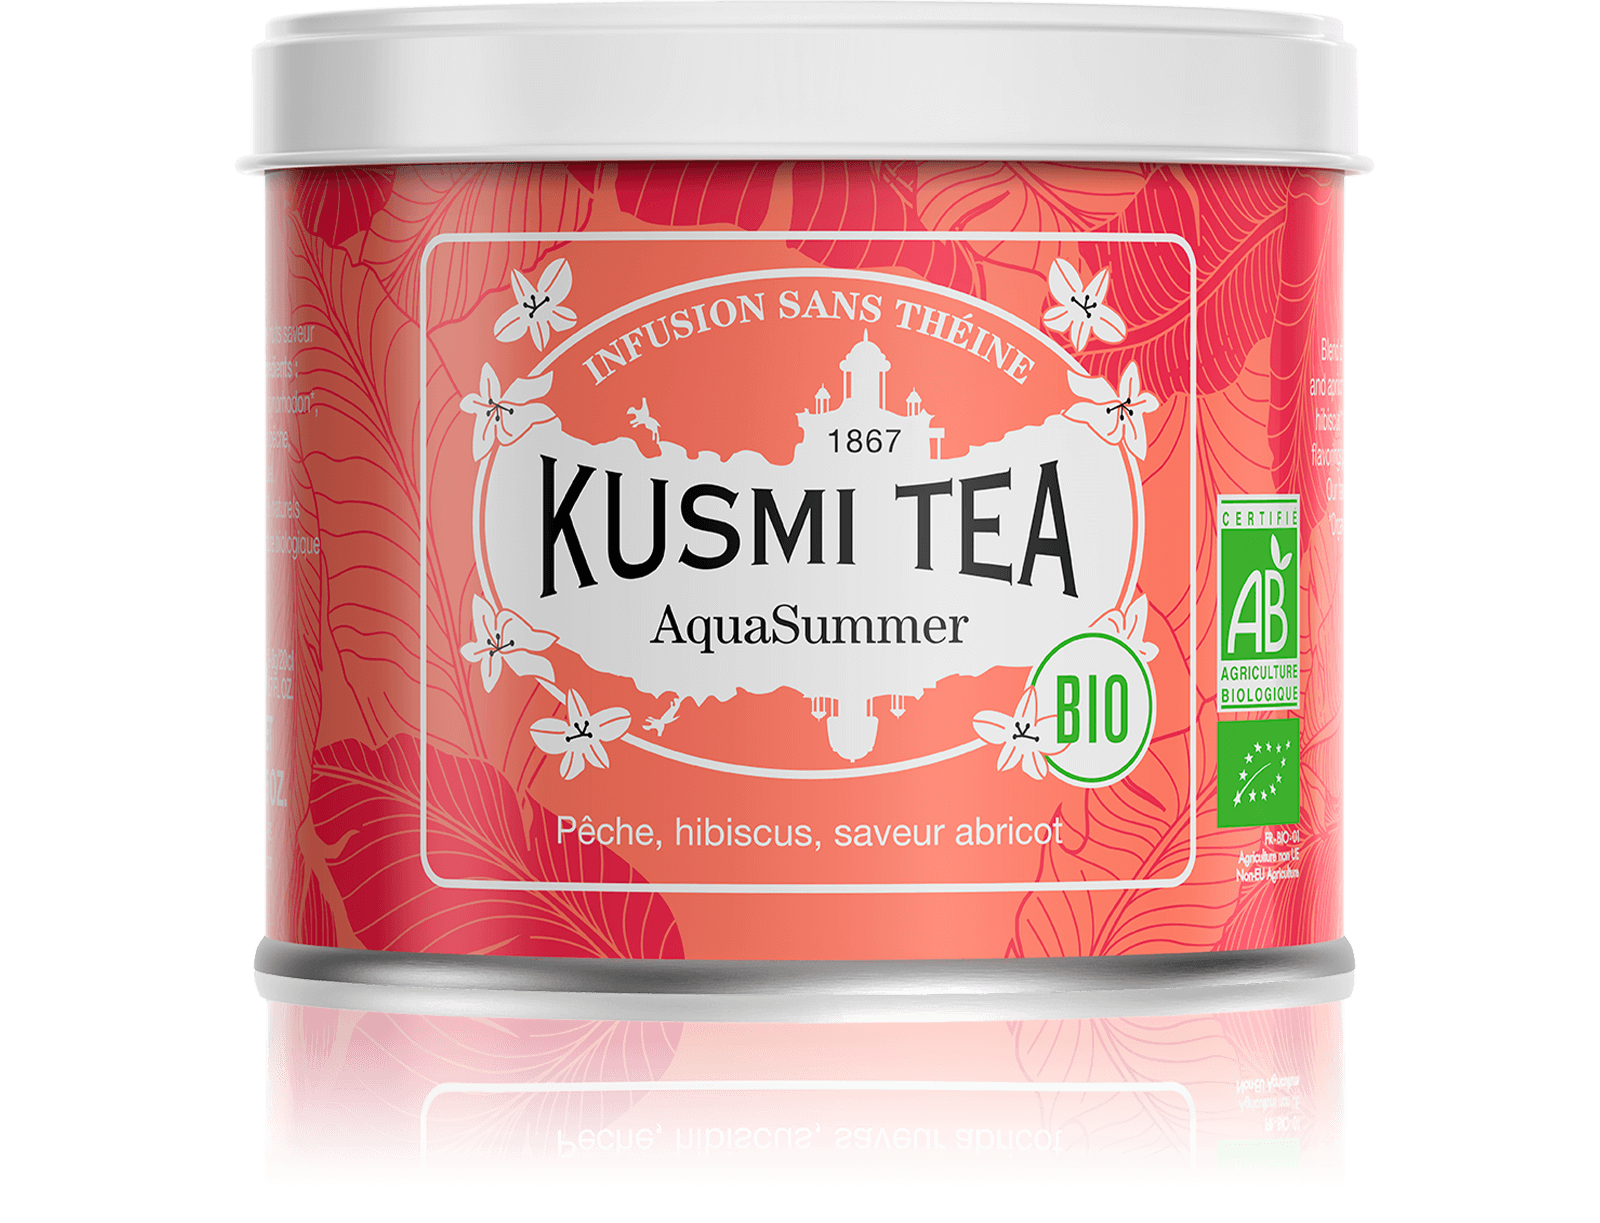 AquaSummer (Infusion de fruits bio) - Kusmi Tea